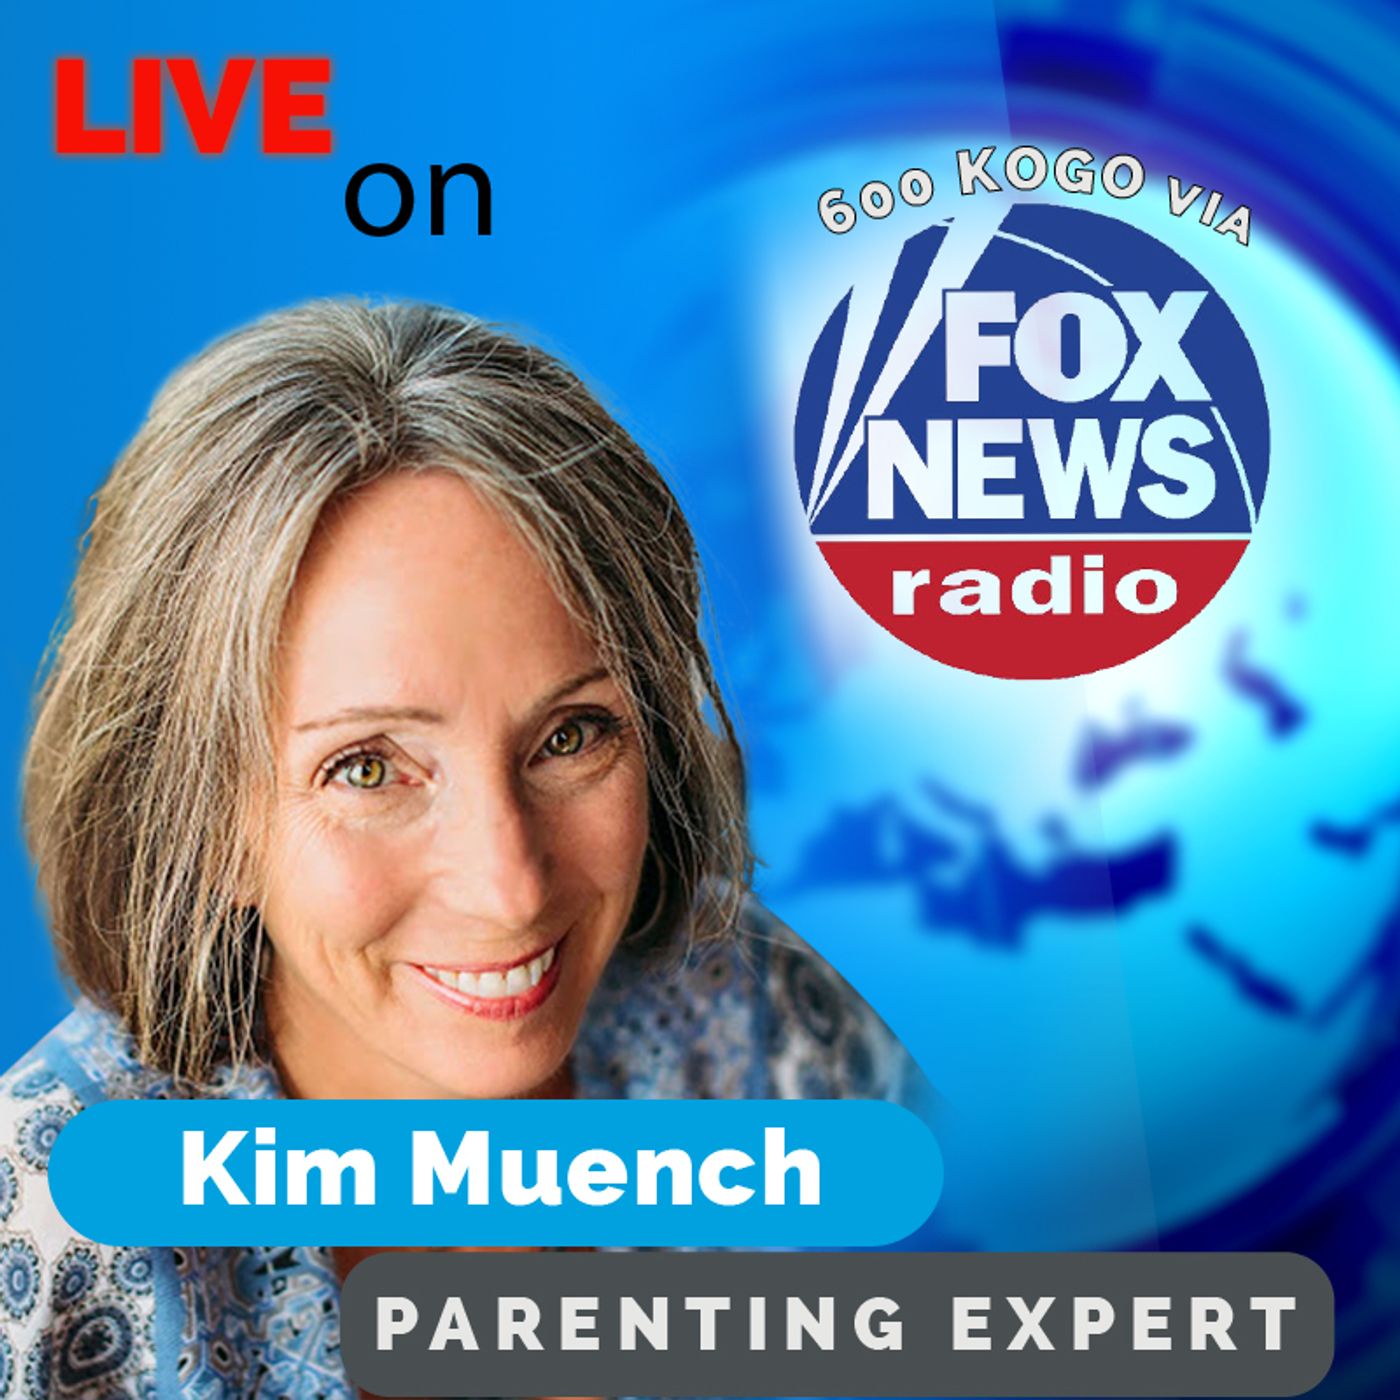 Why parents should never cyber-bully their children || 600 KOGO San Diego via FOX News Radio || 4/19/21